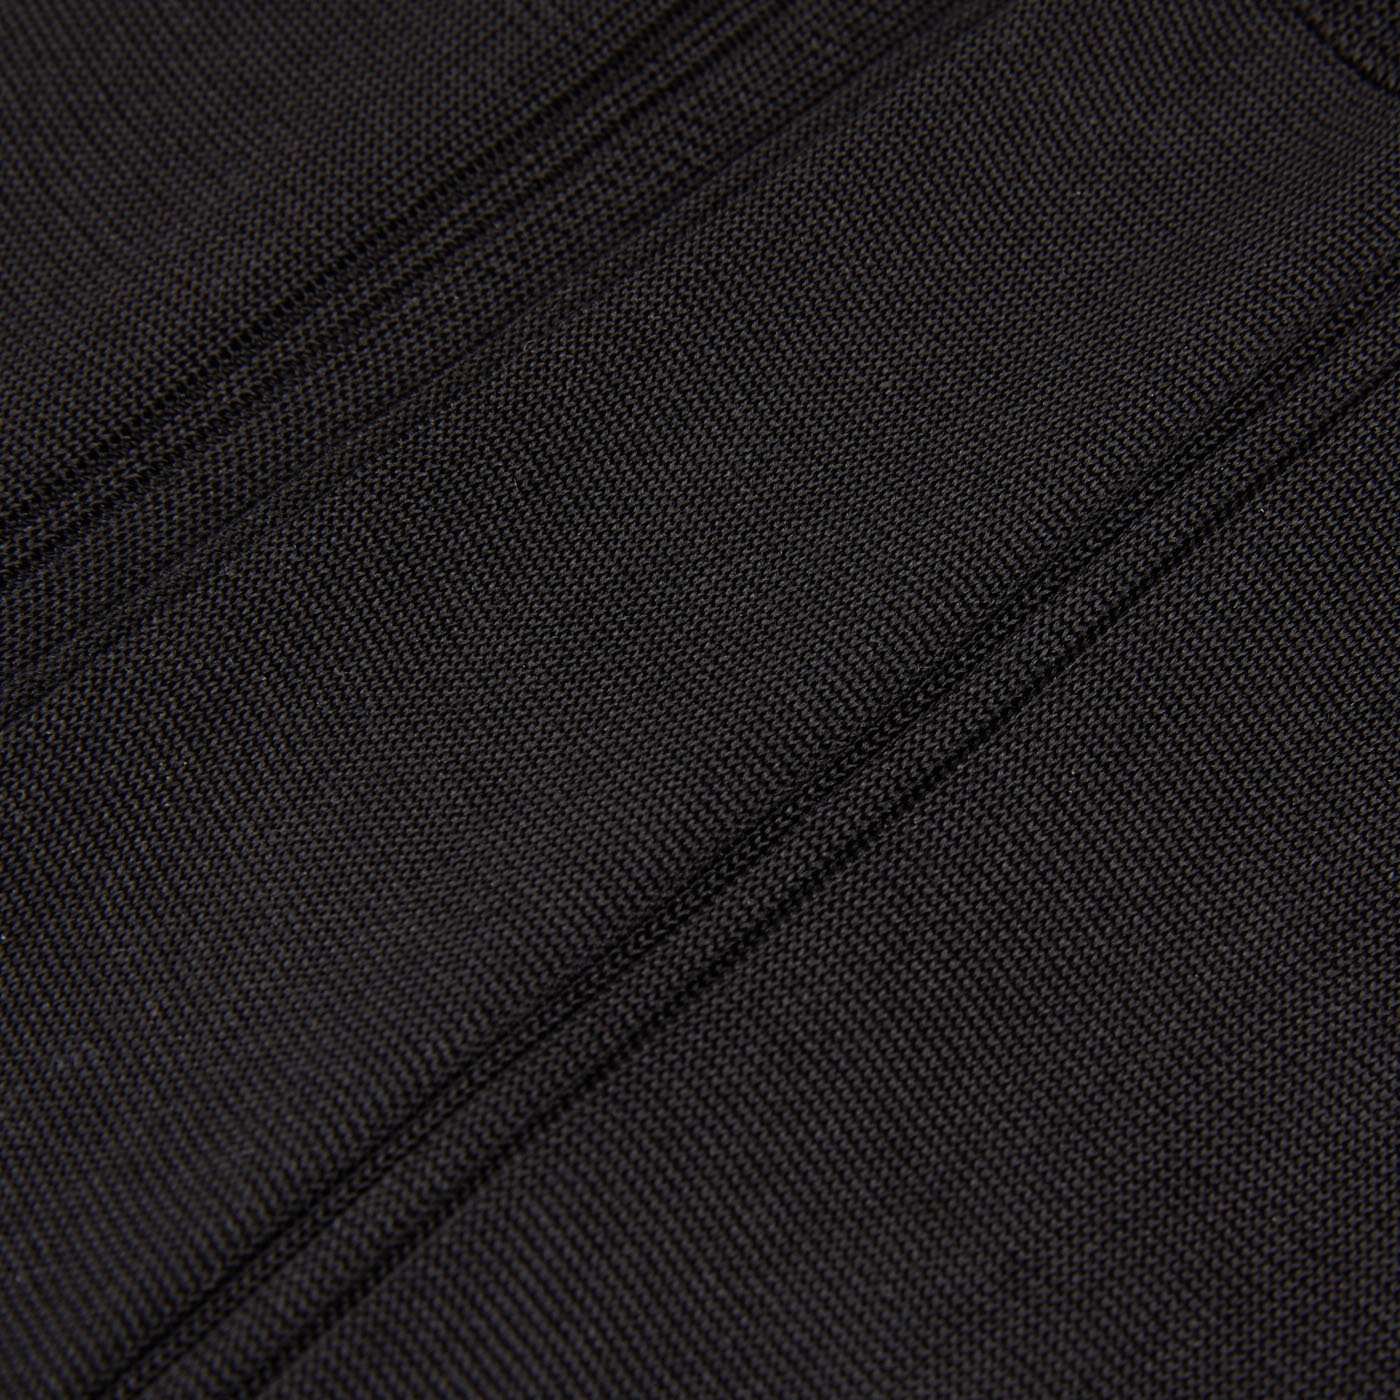 A close up image of black Canali Black Knee Length Silk Dress Socks.